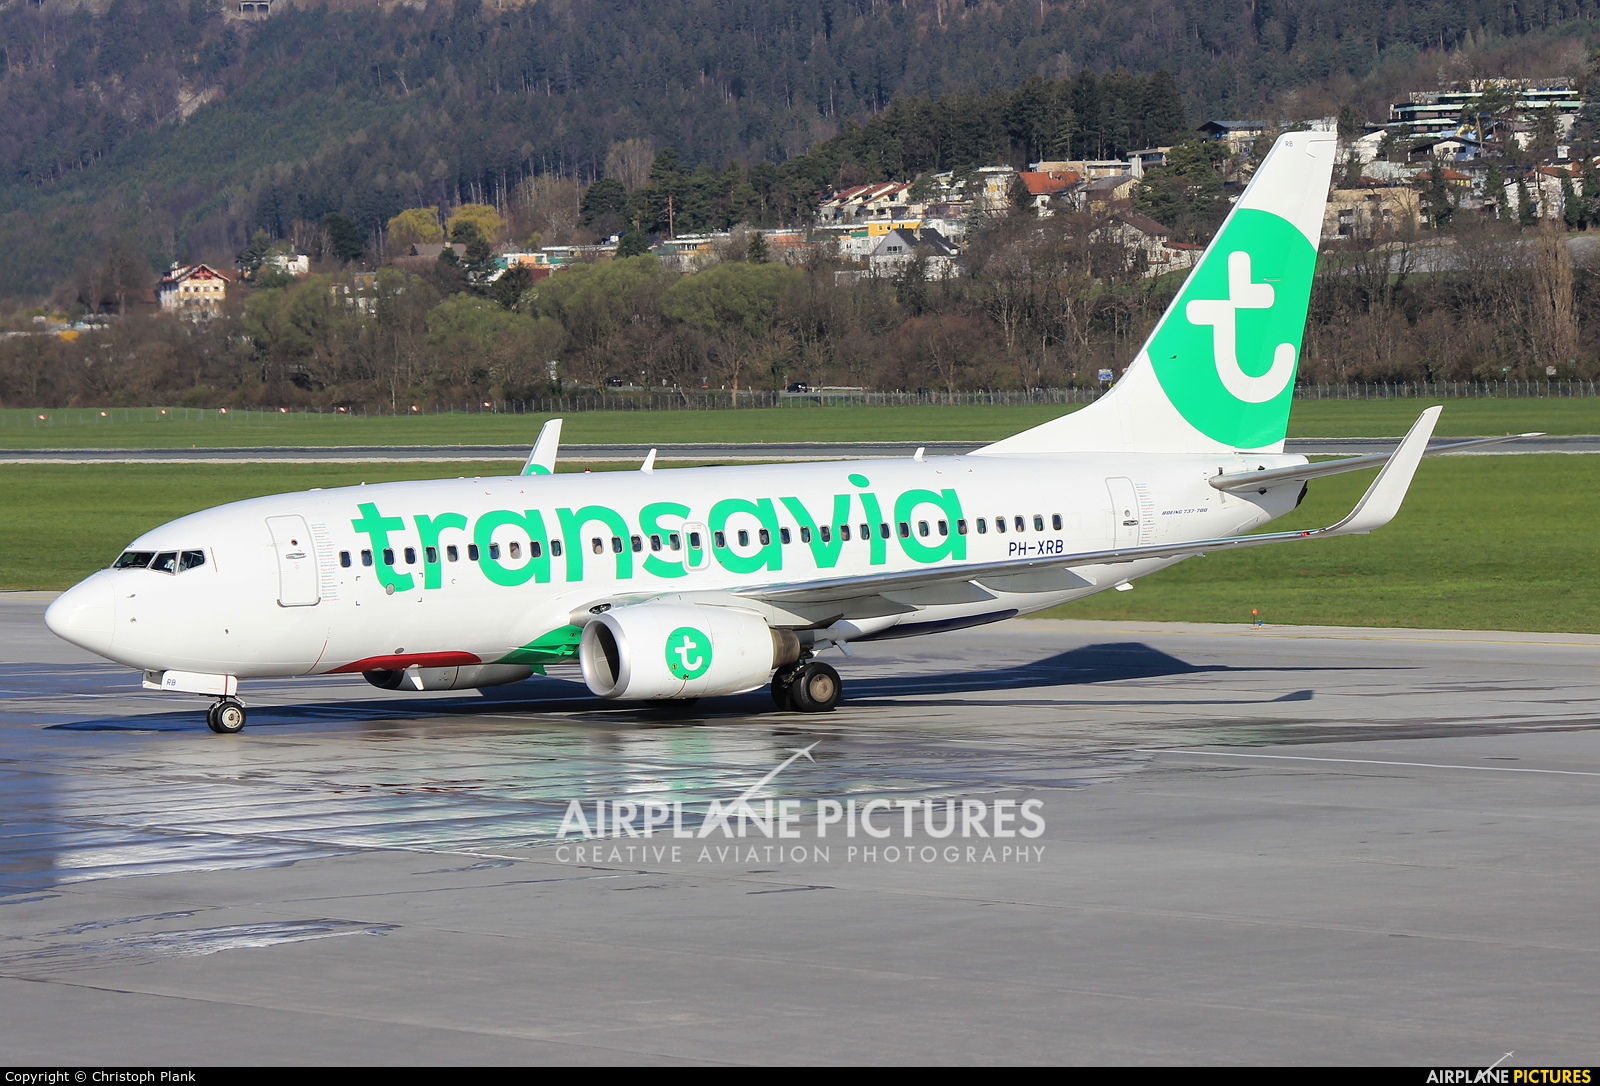 Transavia PH-XRB aircraft at Innsbruck